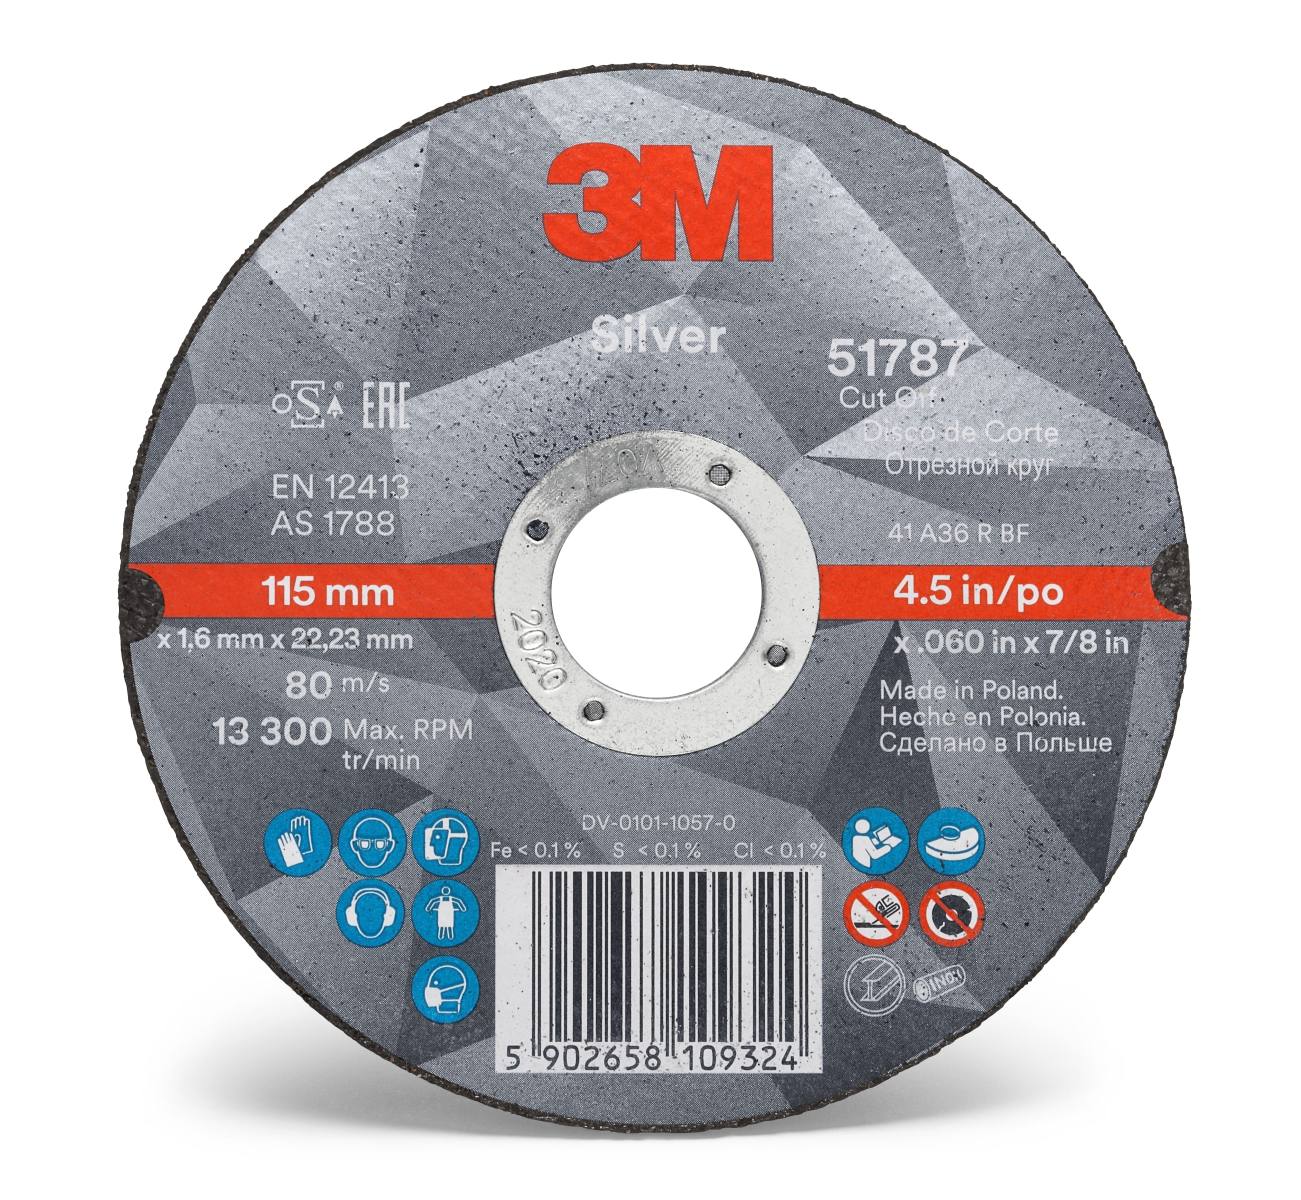 Disco da taglio 3M Silver Cut-Off, 180 mm, 2,0 mm, 22,23 mm, T41, 51797